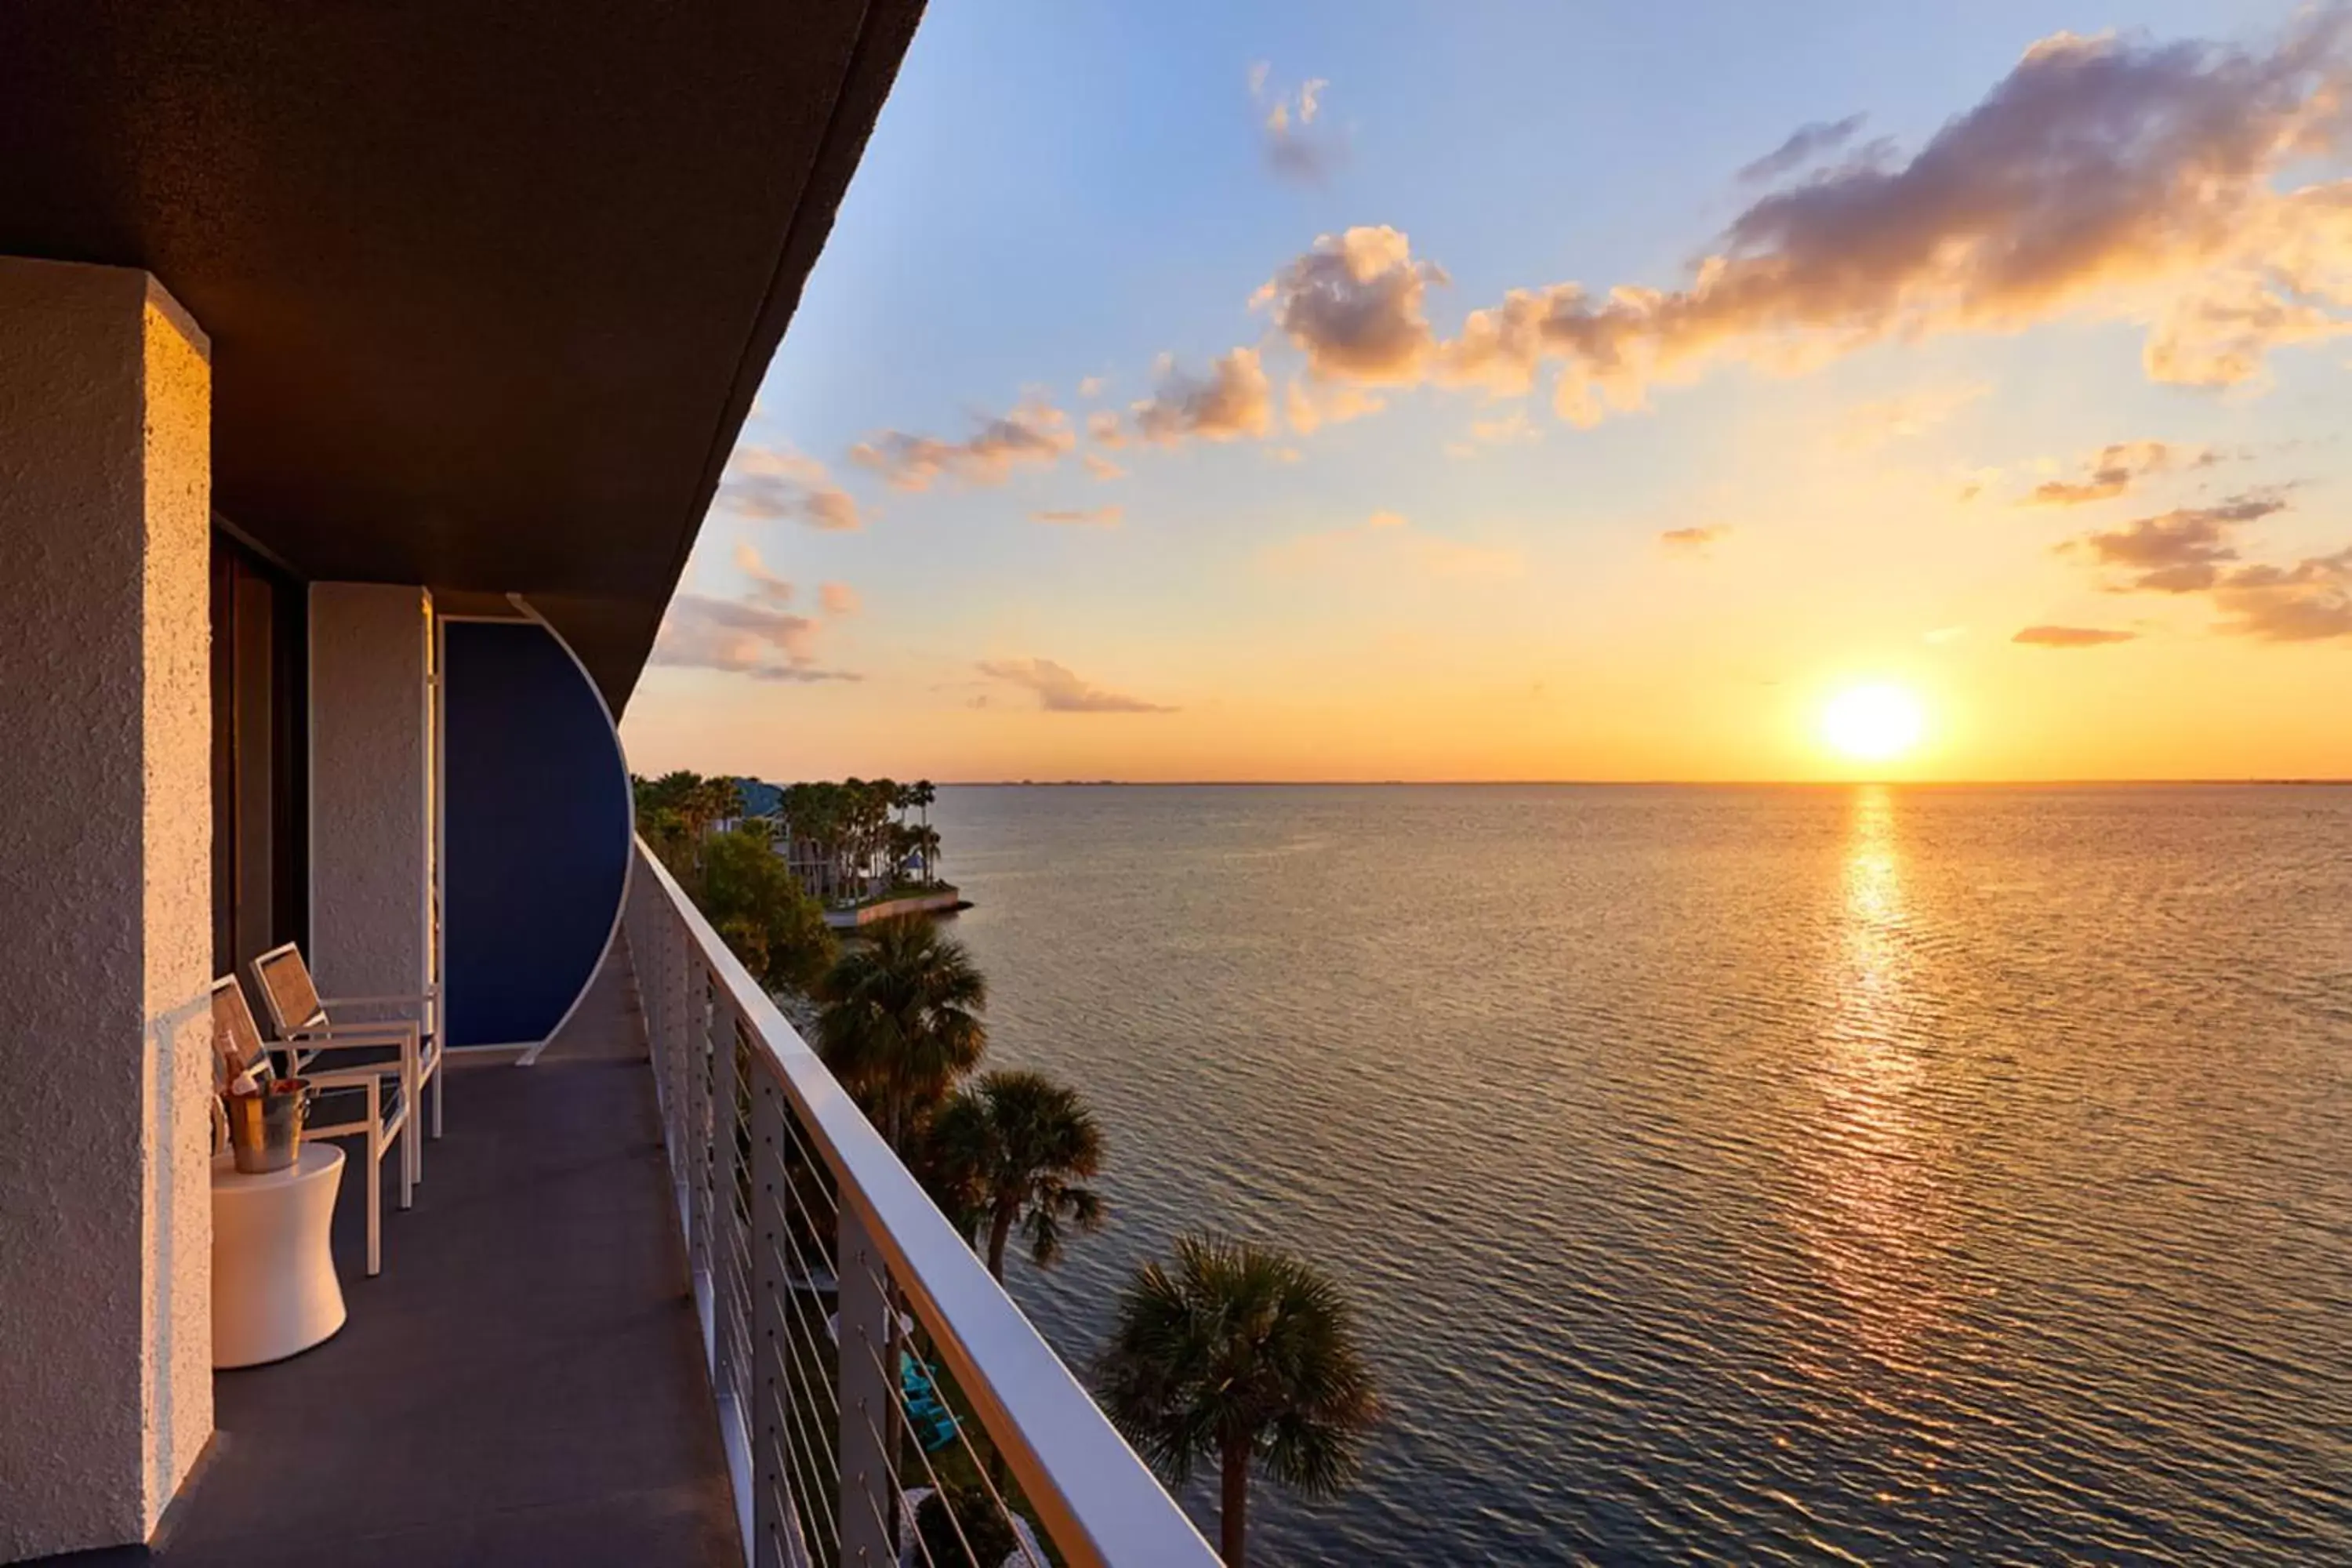 Sea view, Sunrise/Sunset in The Godfrey Hotel & Cabanas Tampa